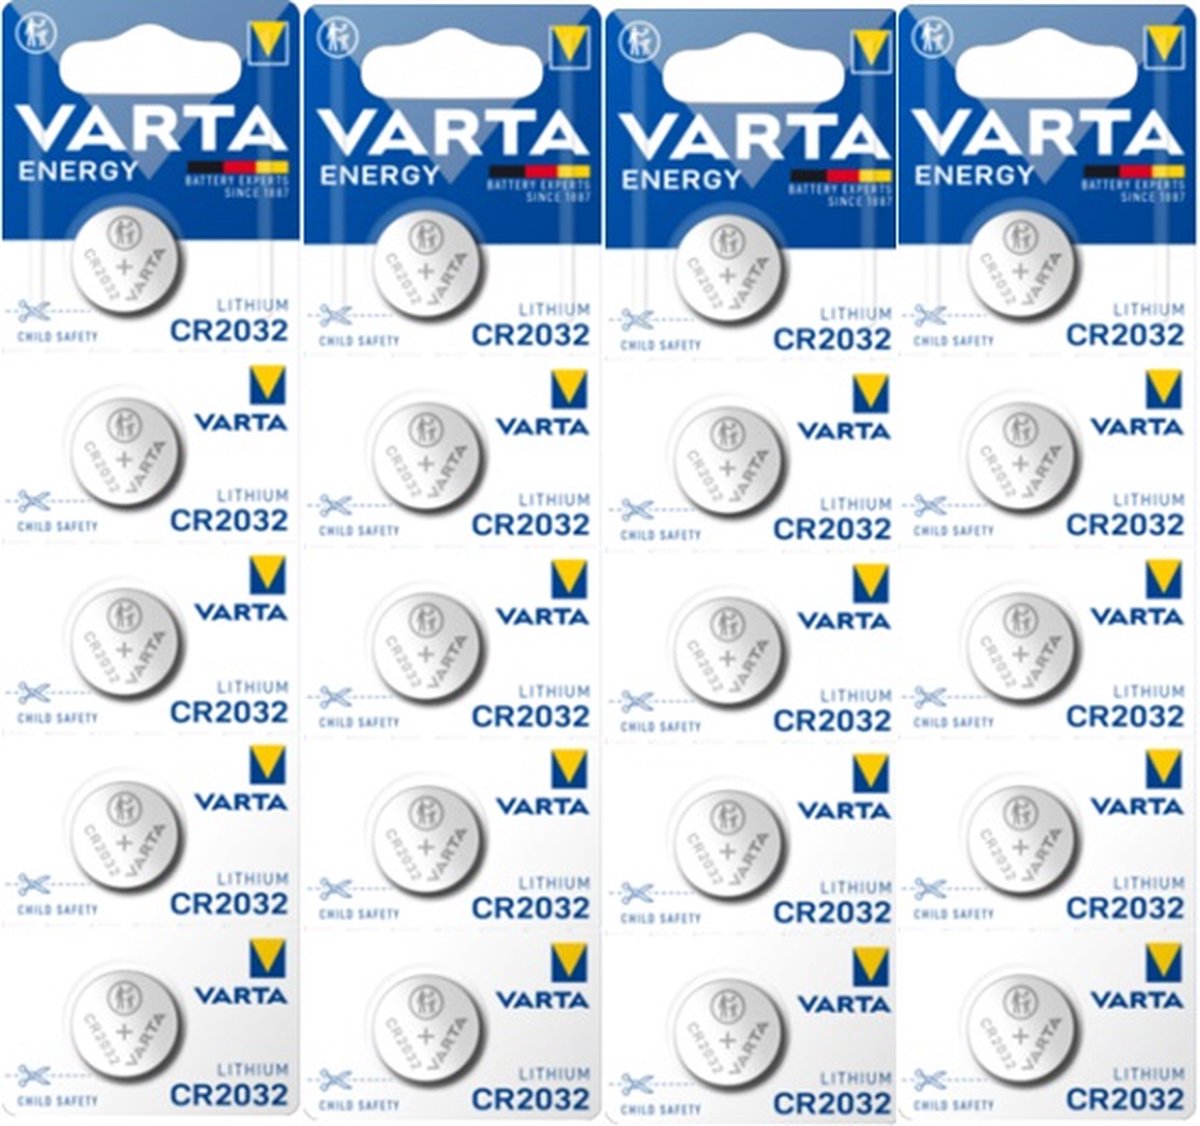 Varta Energy Lithium CR2032 20 pack - Varta